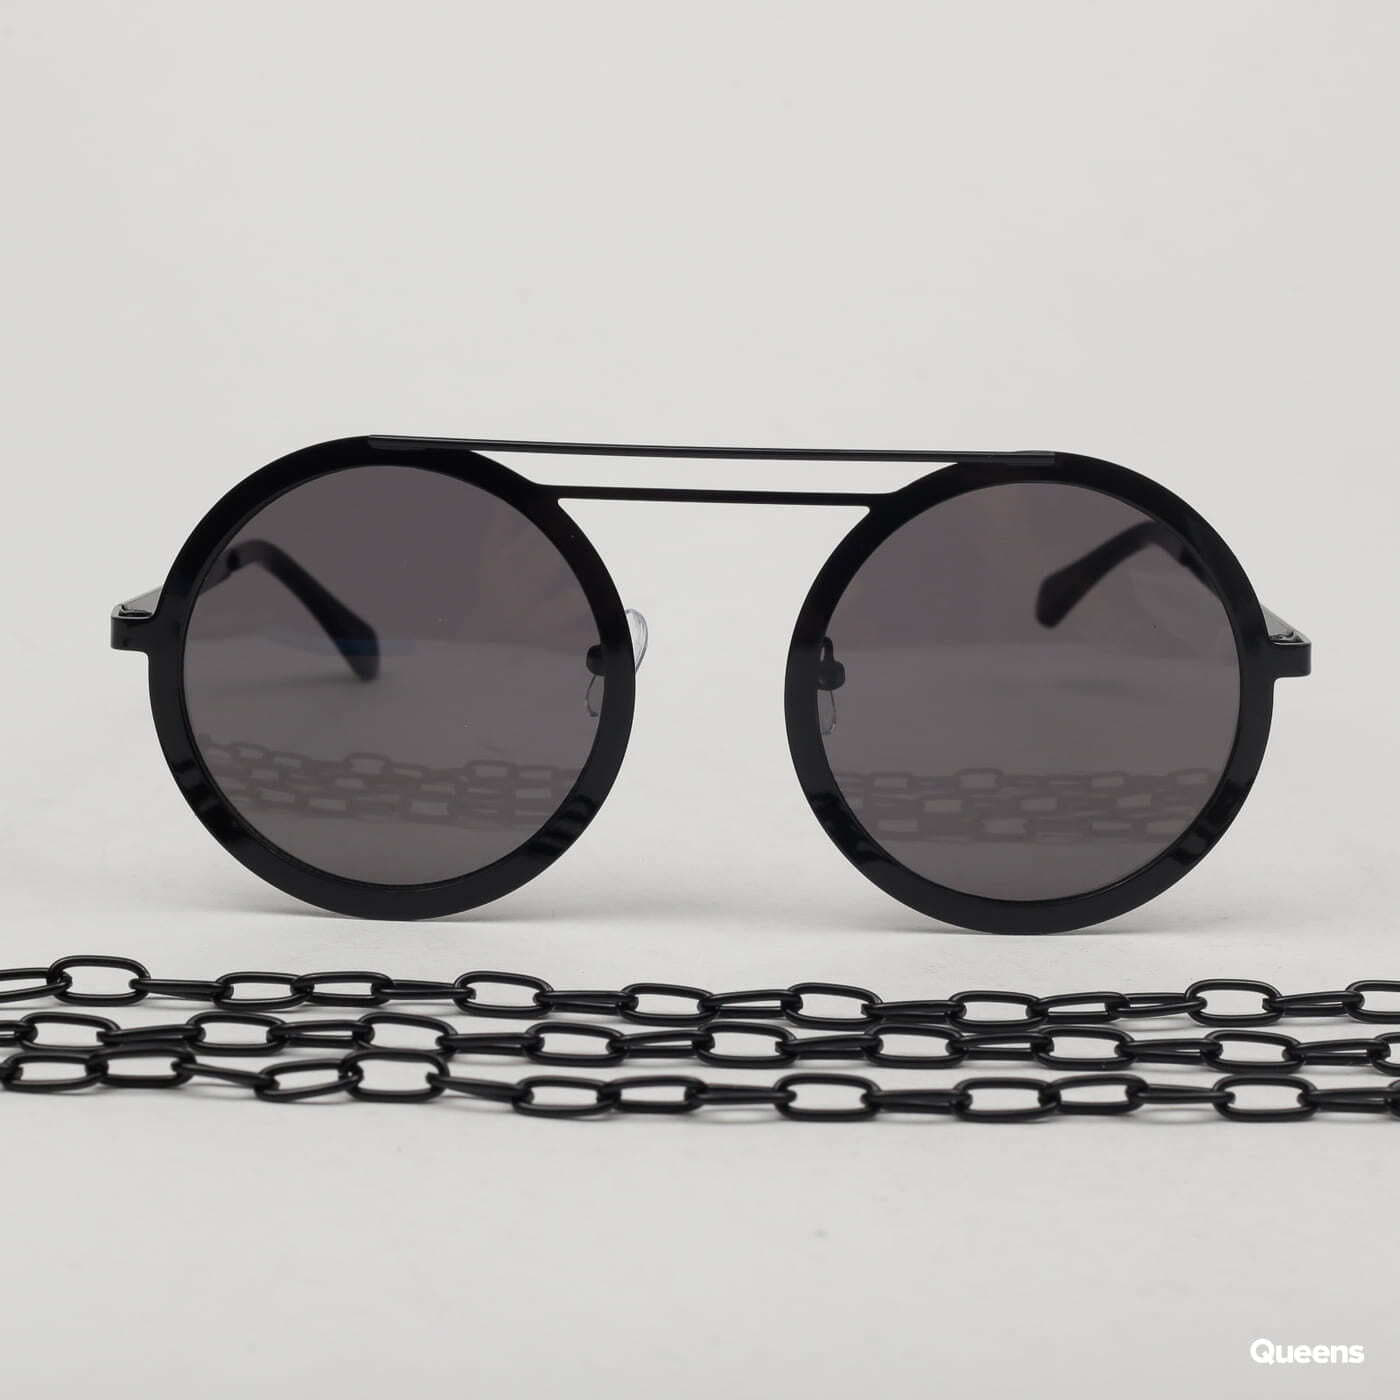 Classics Queens 104 Urban Black | Chain Sunglasses Sunglasses